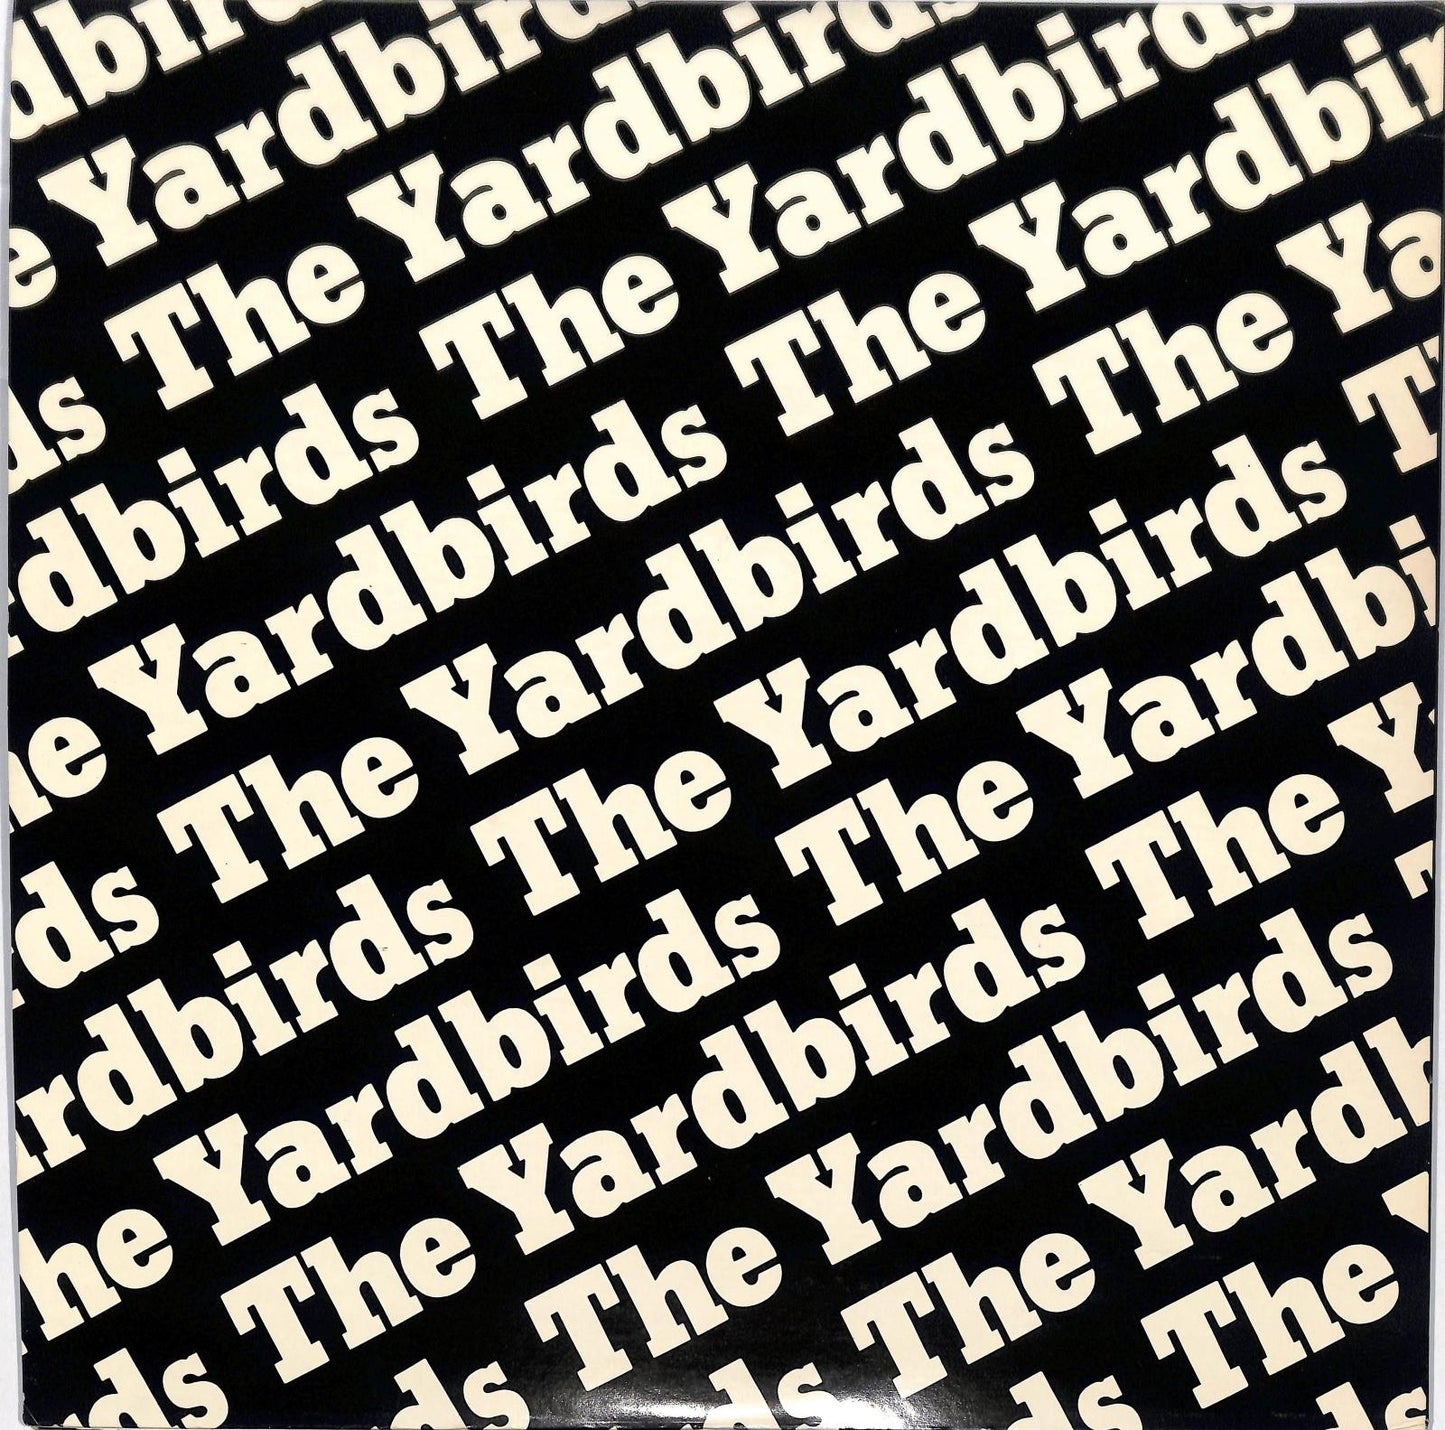 THE YARDBIRDS - The Yardbirds